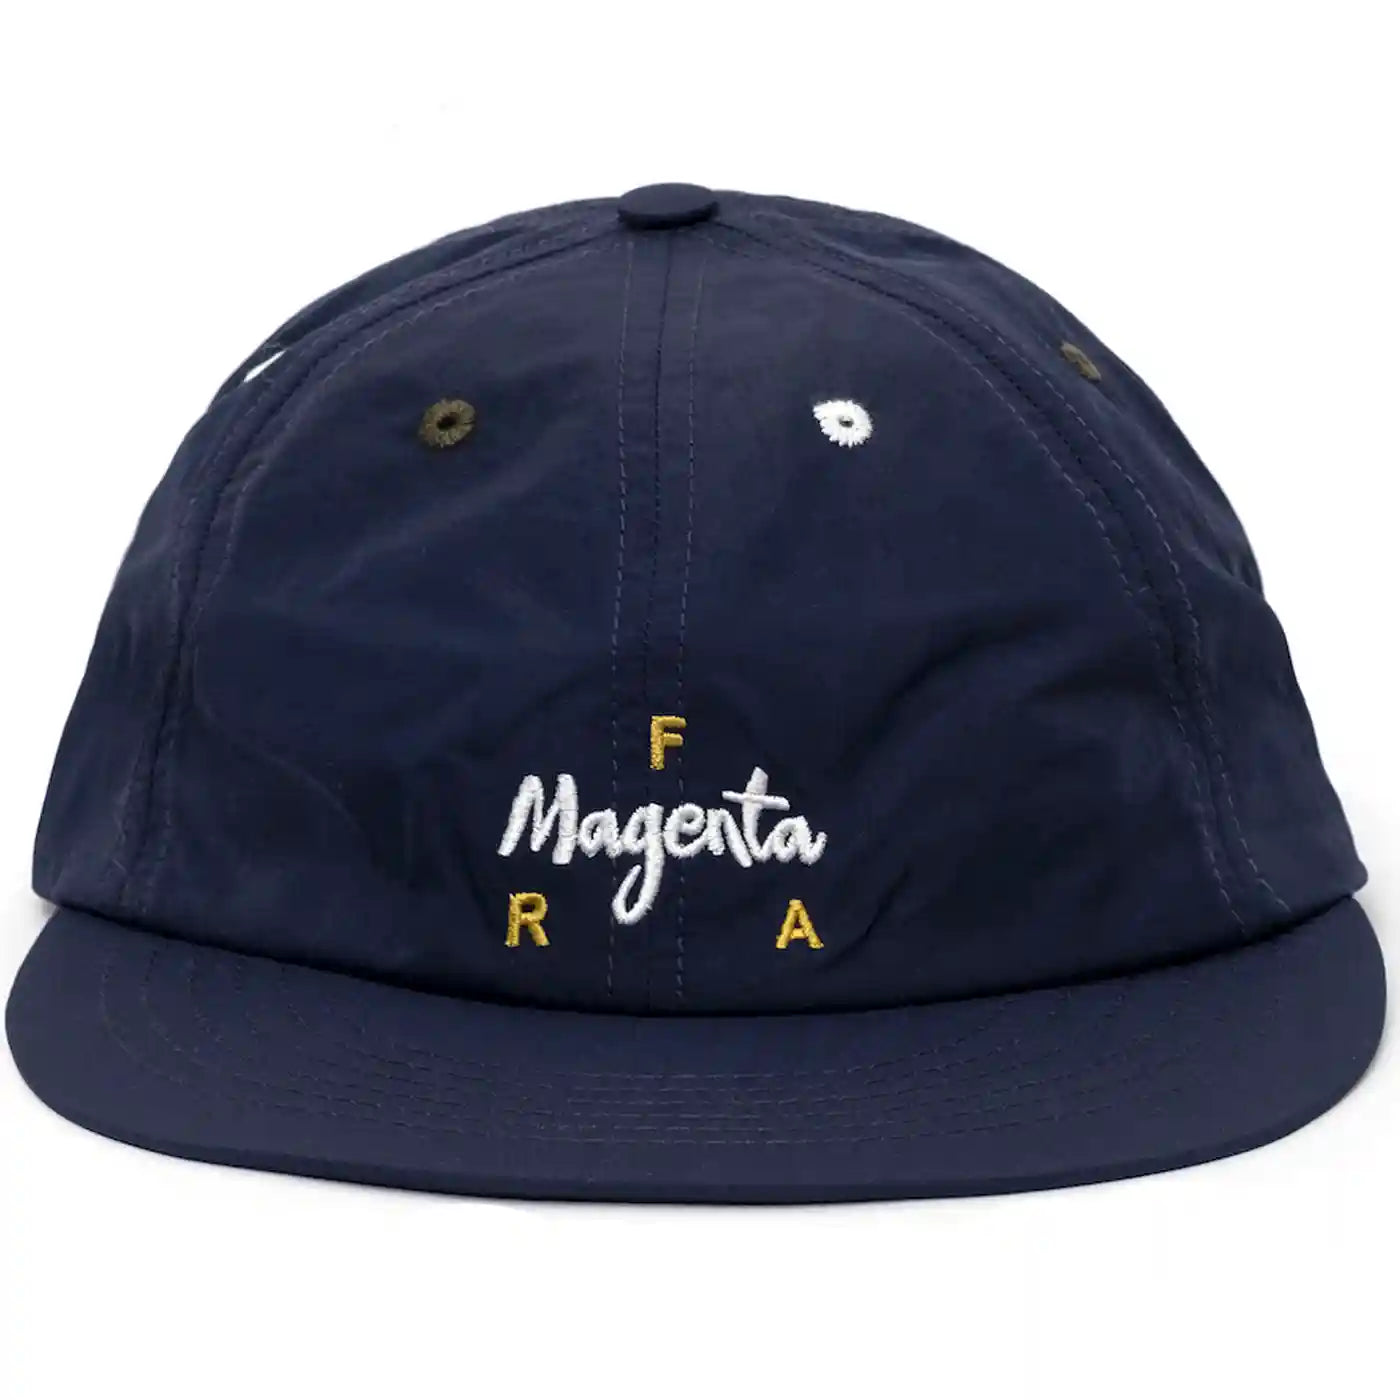 MAGNTA F.R.A NYLON 6P HAT DARK NAVY - The Drive Skateshop